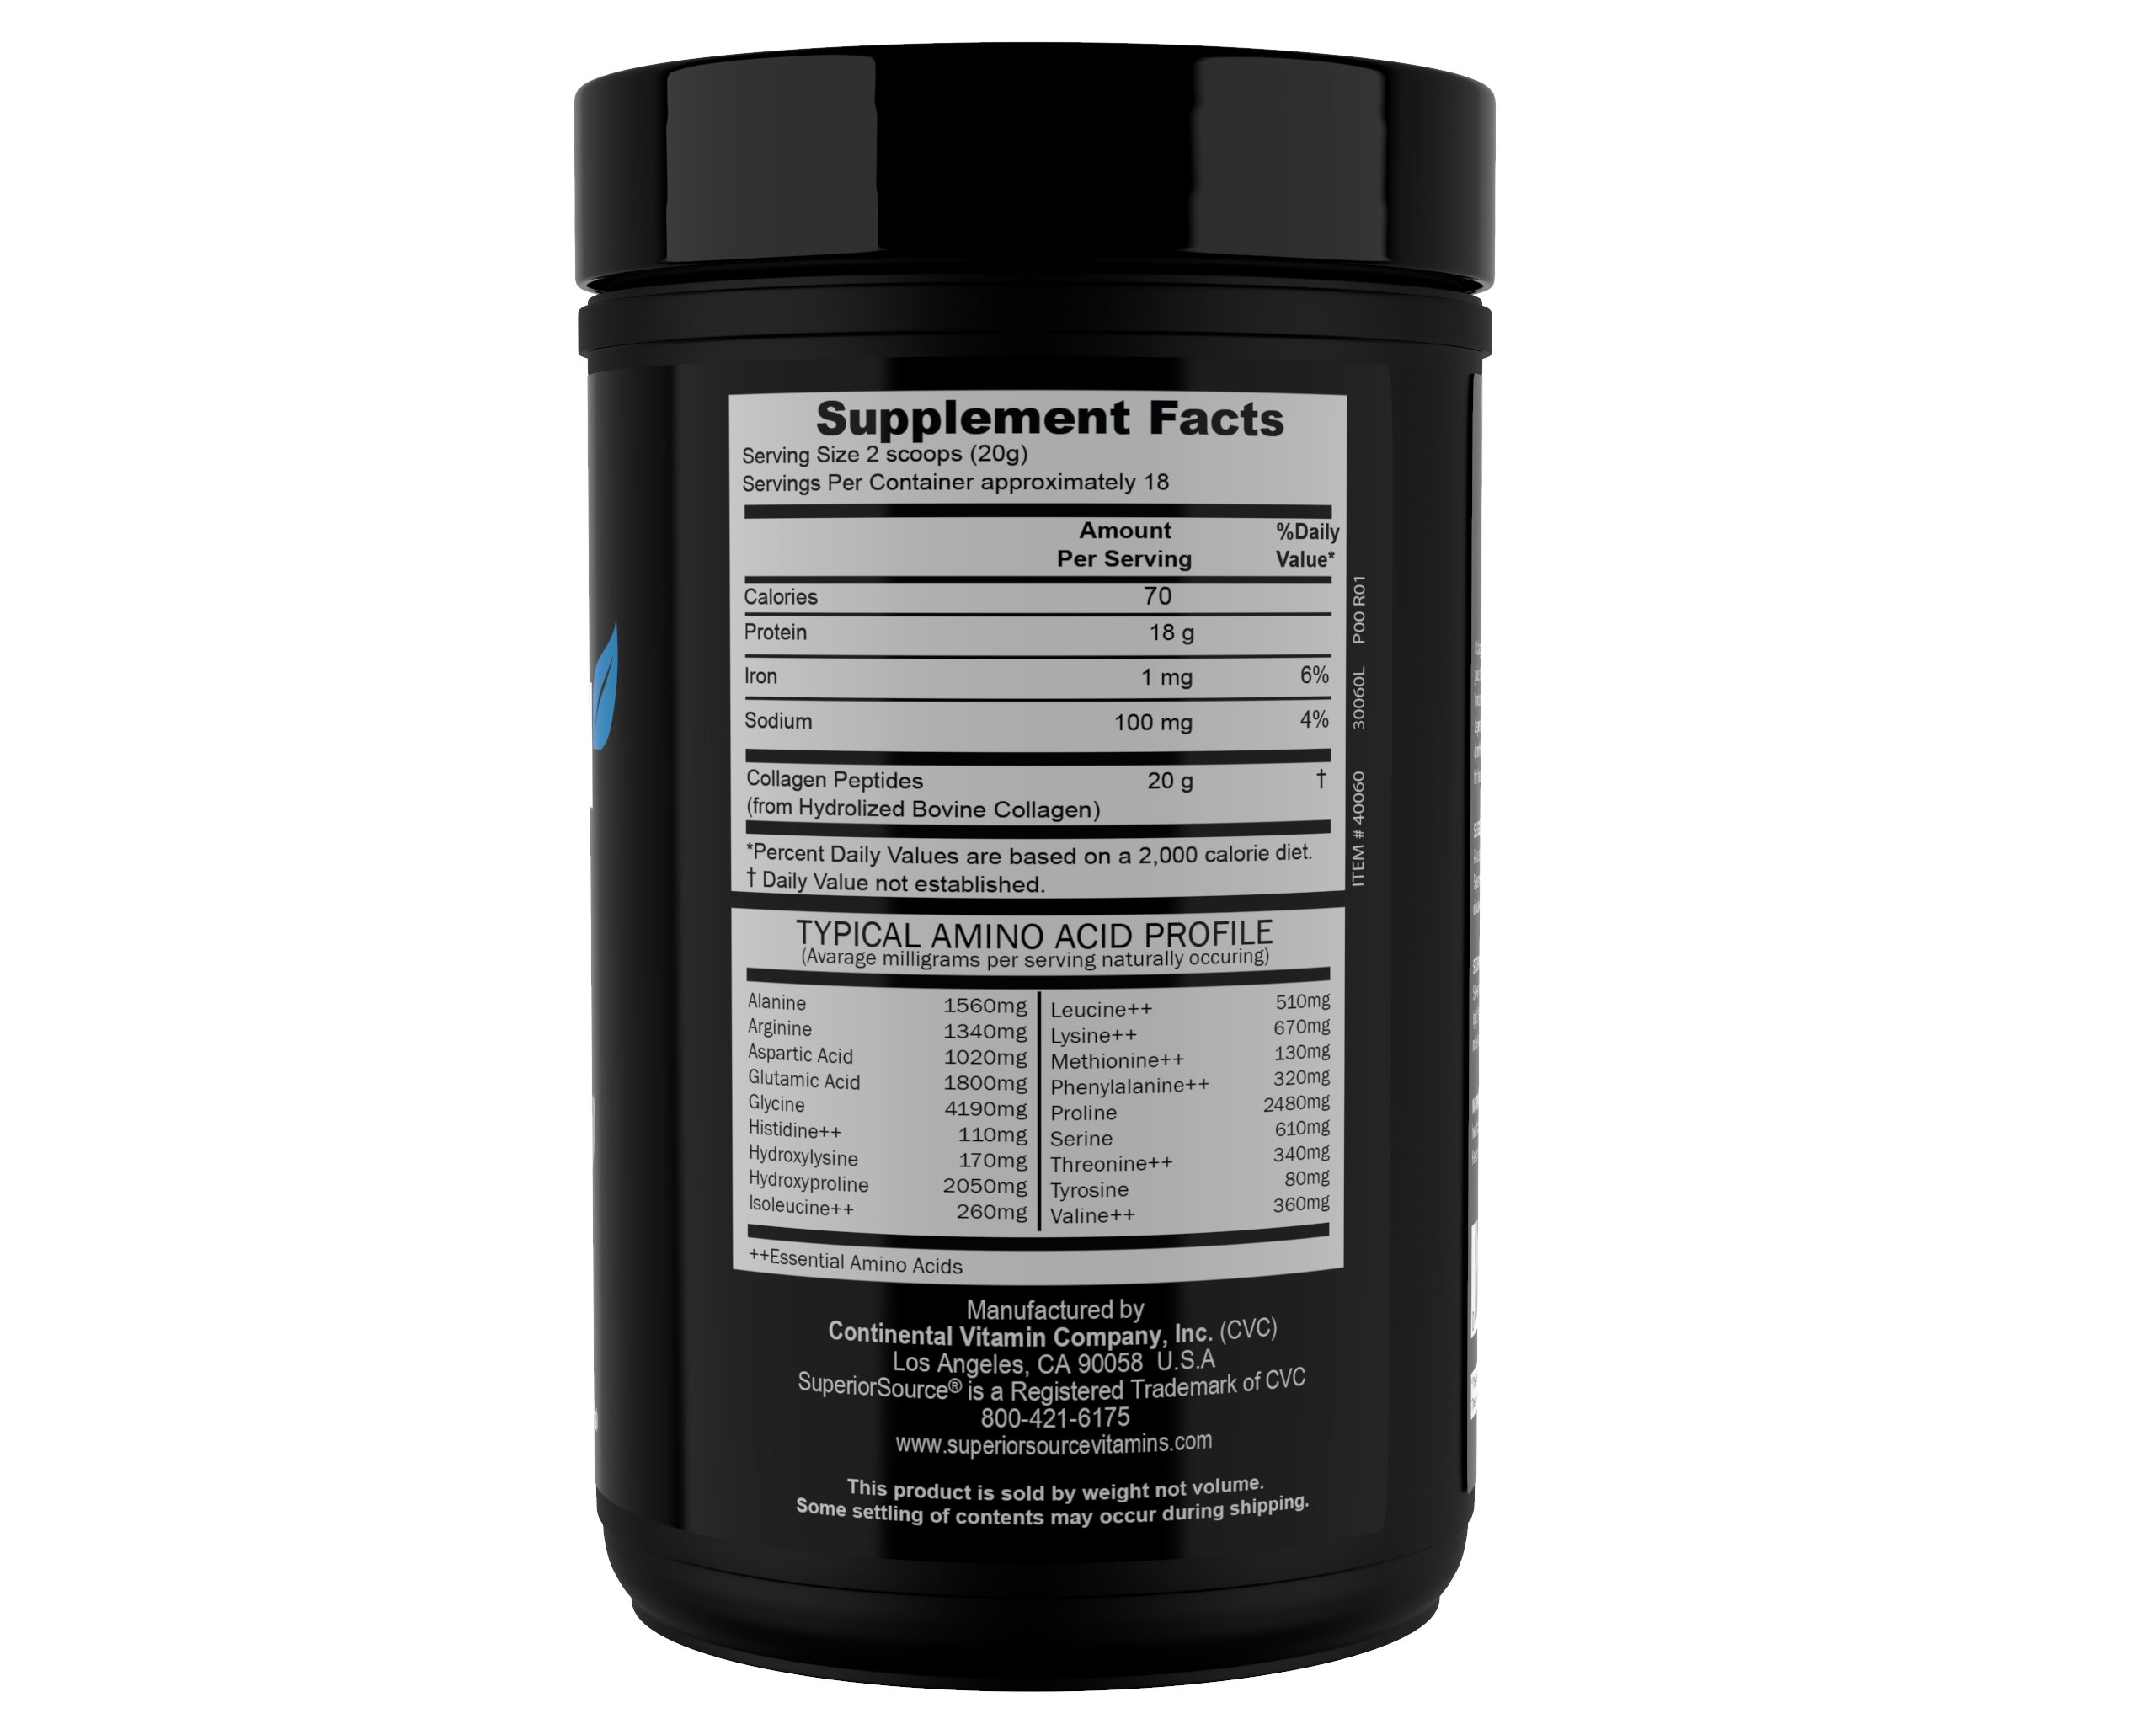 Superior Source Collagen Peptides Powder, Unflavored, 12.7 oz - High-quality Collagen Powder by Superior Source at 